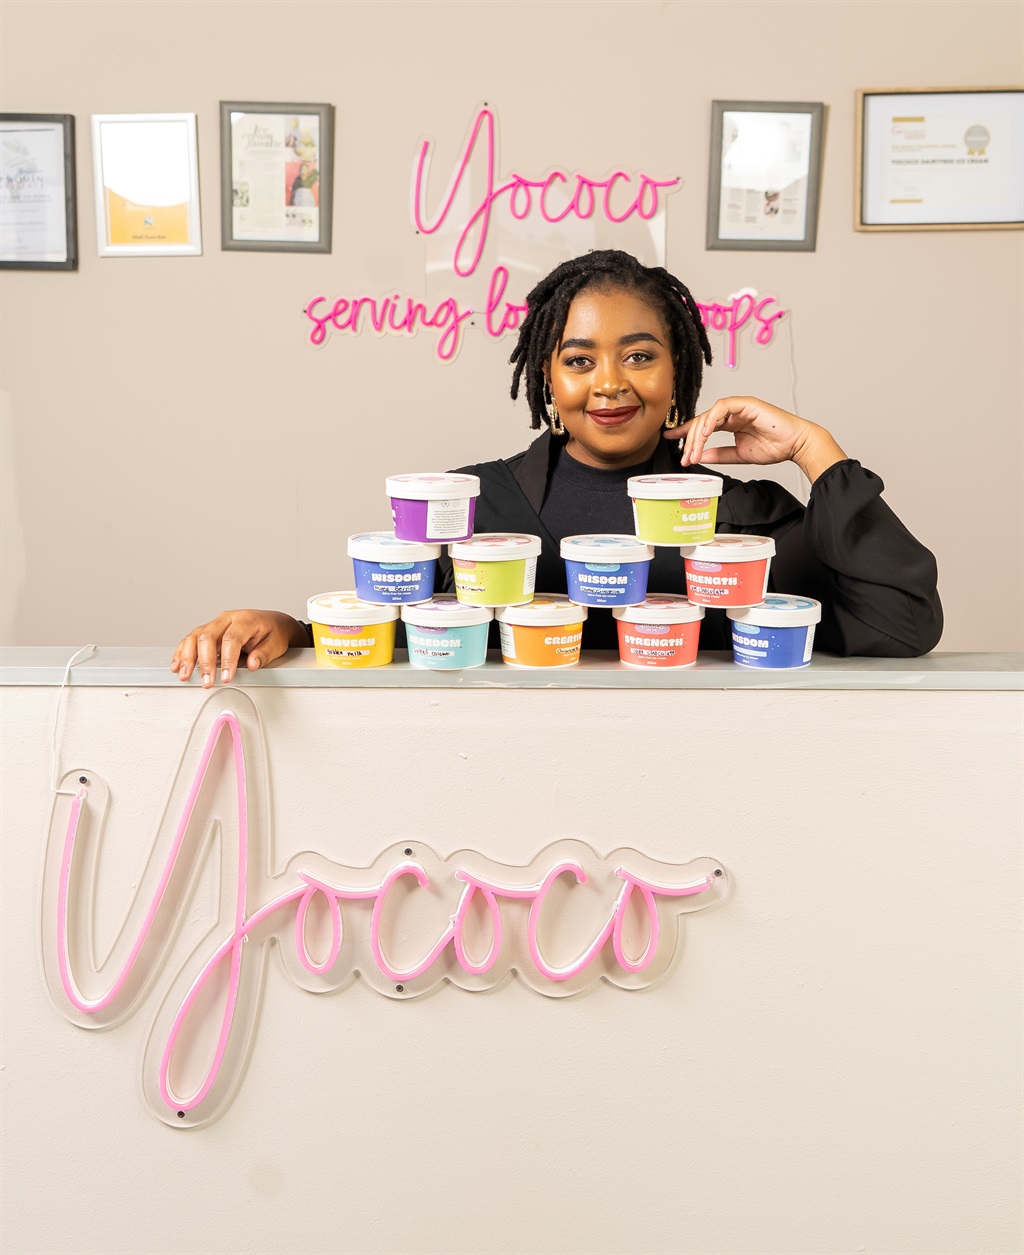 Sinenhlanhla Ndlela is the founder of one of SA's vegan ice creams, Yococo